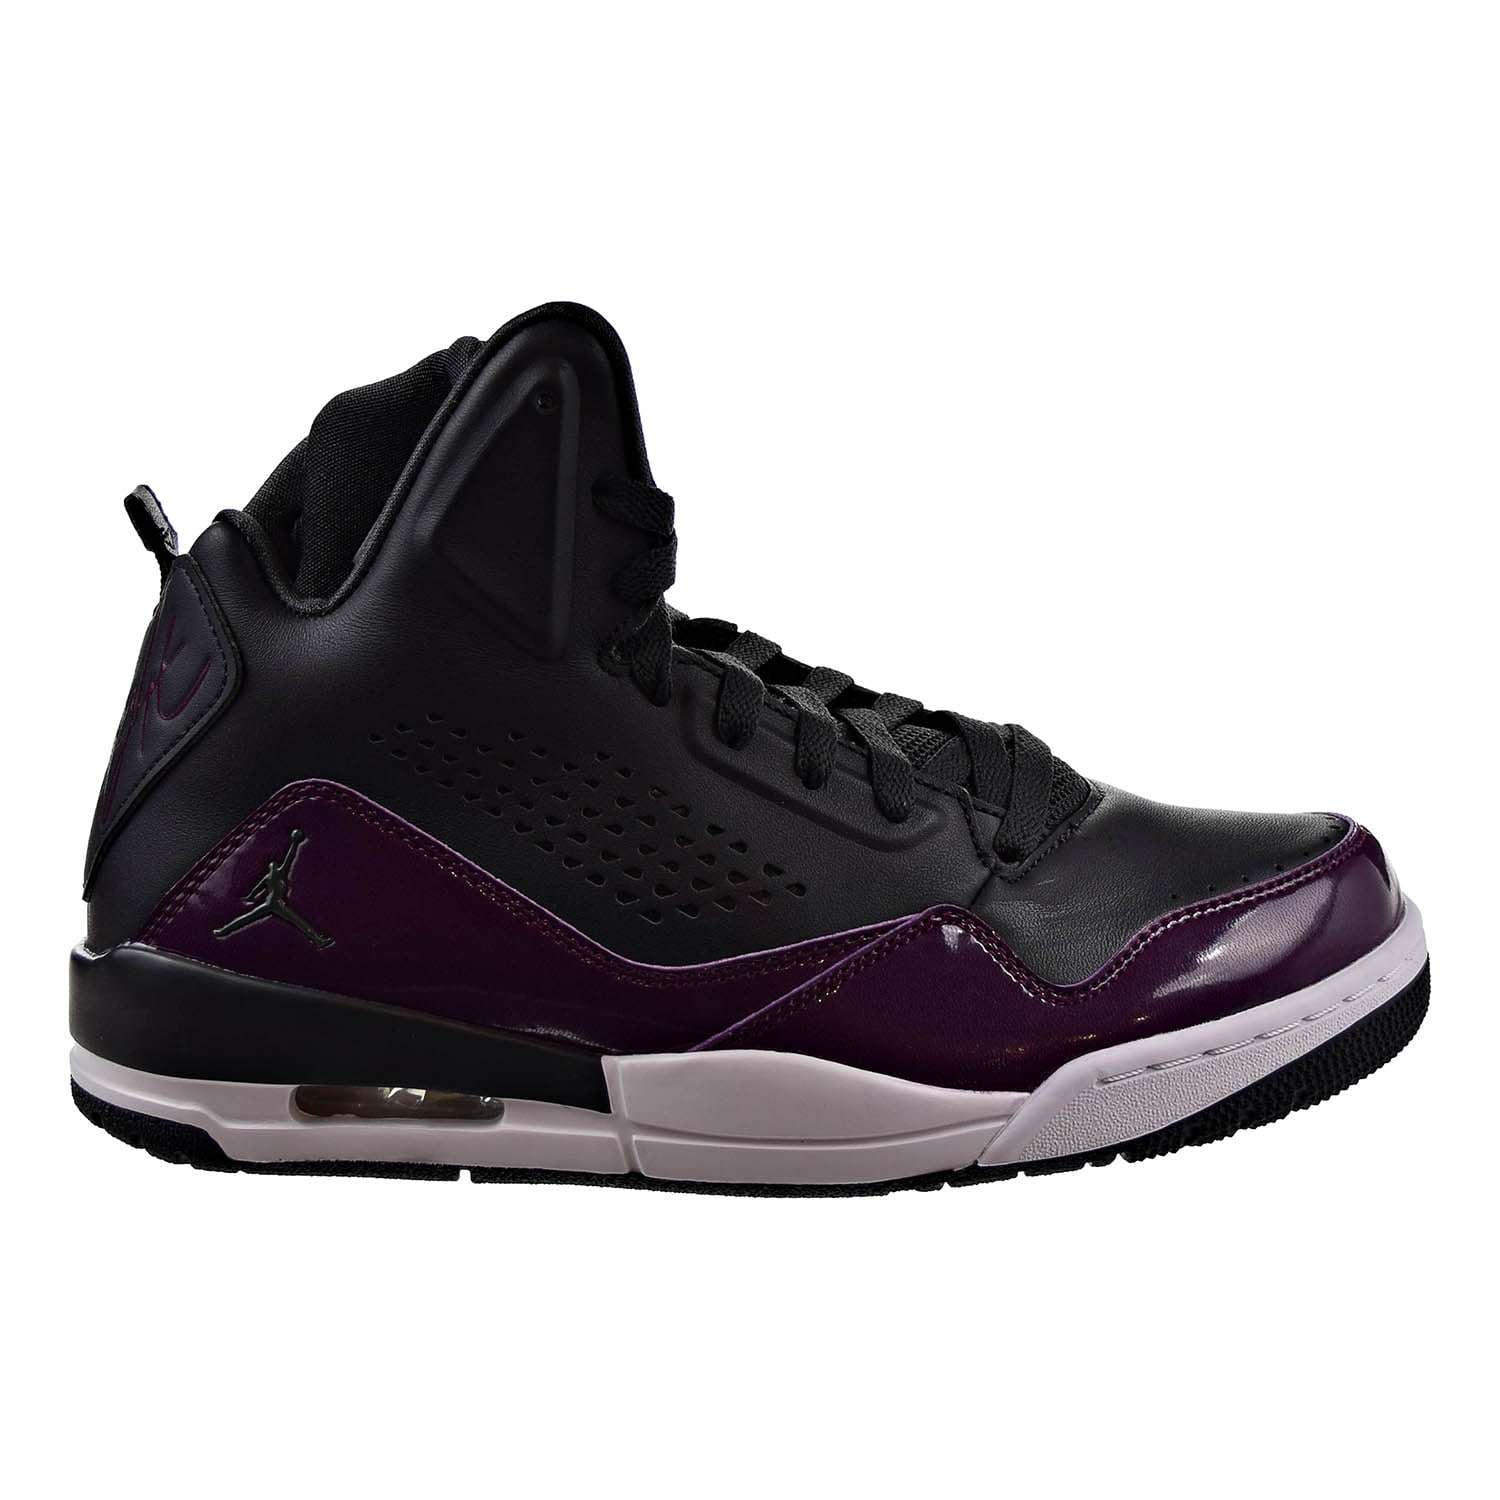 Jordan SC-3 Men\'s Basketball Shoes Anthracite/Anthracite-Bordeaux  629877-022